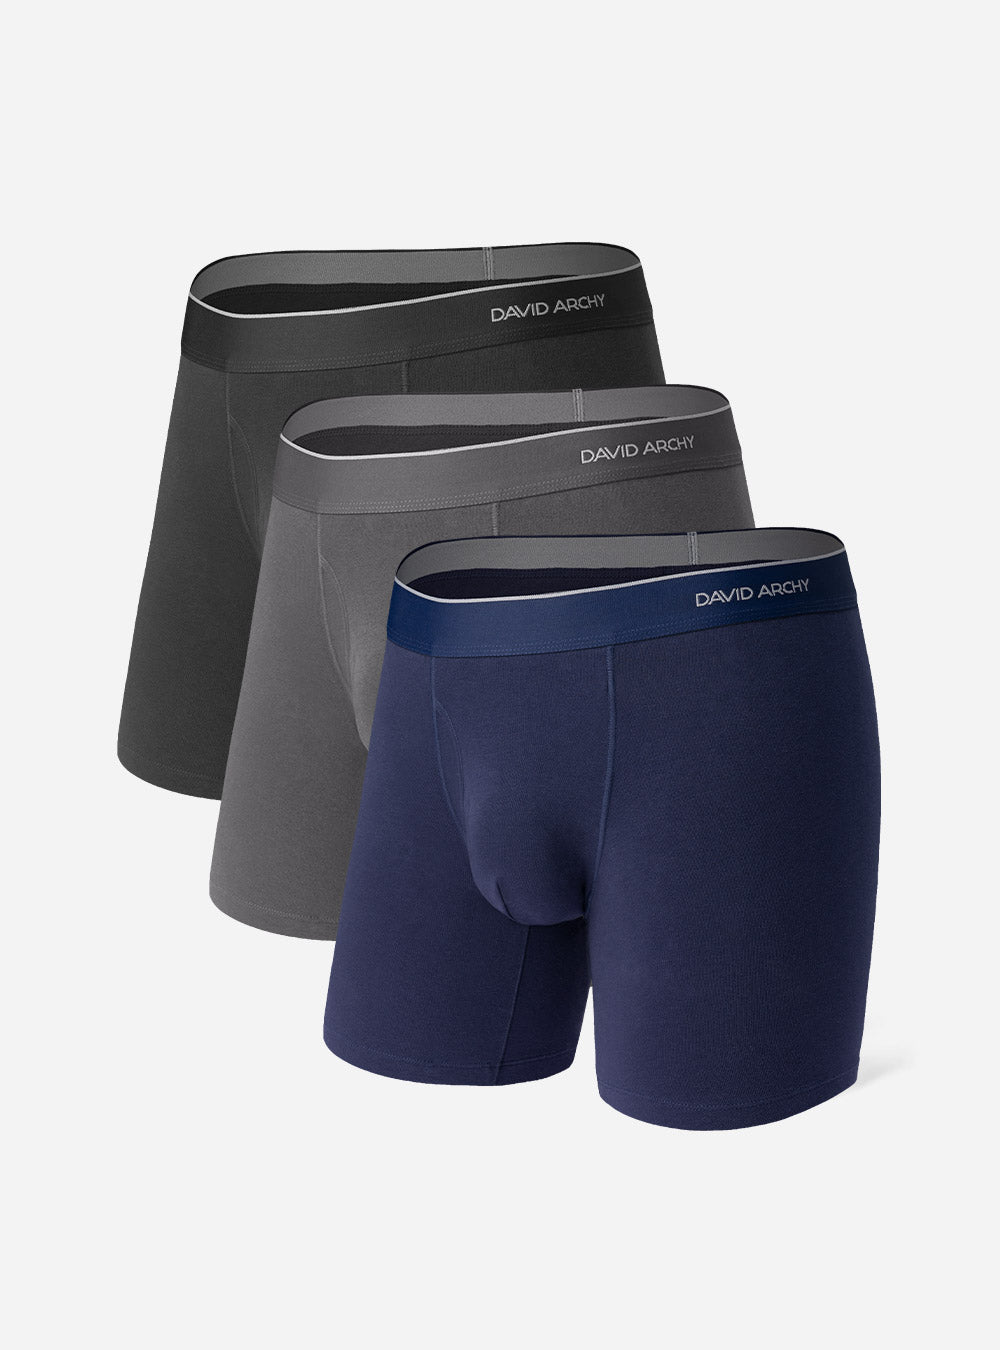 David Archy 3 Packs Cotton Boxer Briefs with Pouch Support Elite Men's Soft Breathable  Underwear